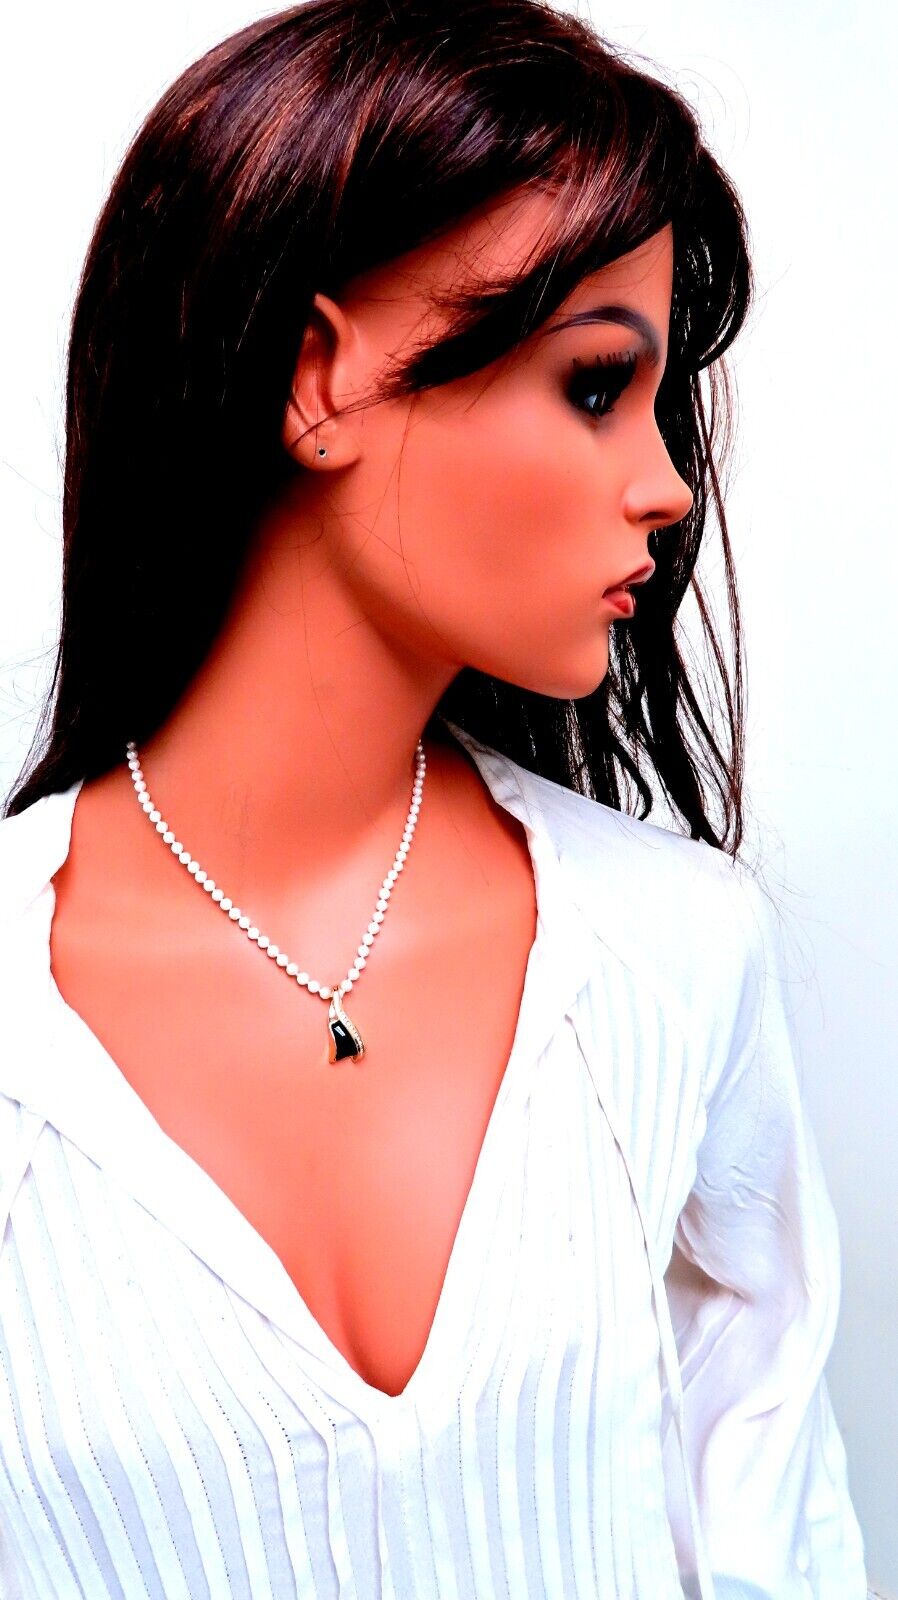 Carved Black Onyx Natural Diamonds Necklace 14kt Gold